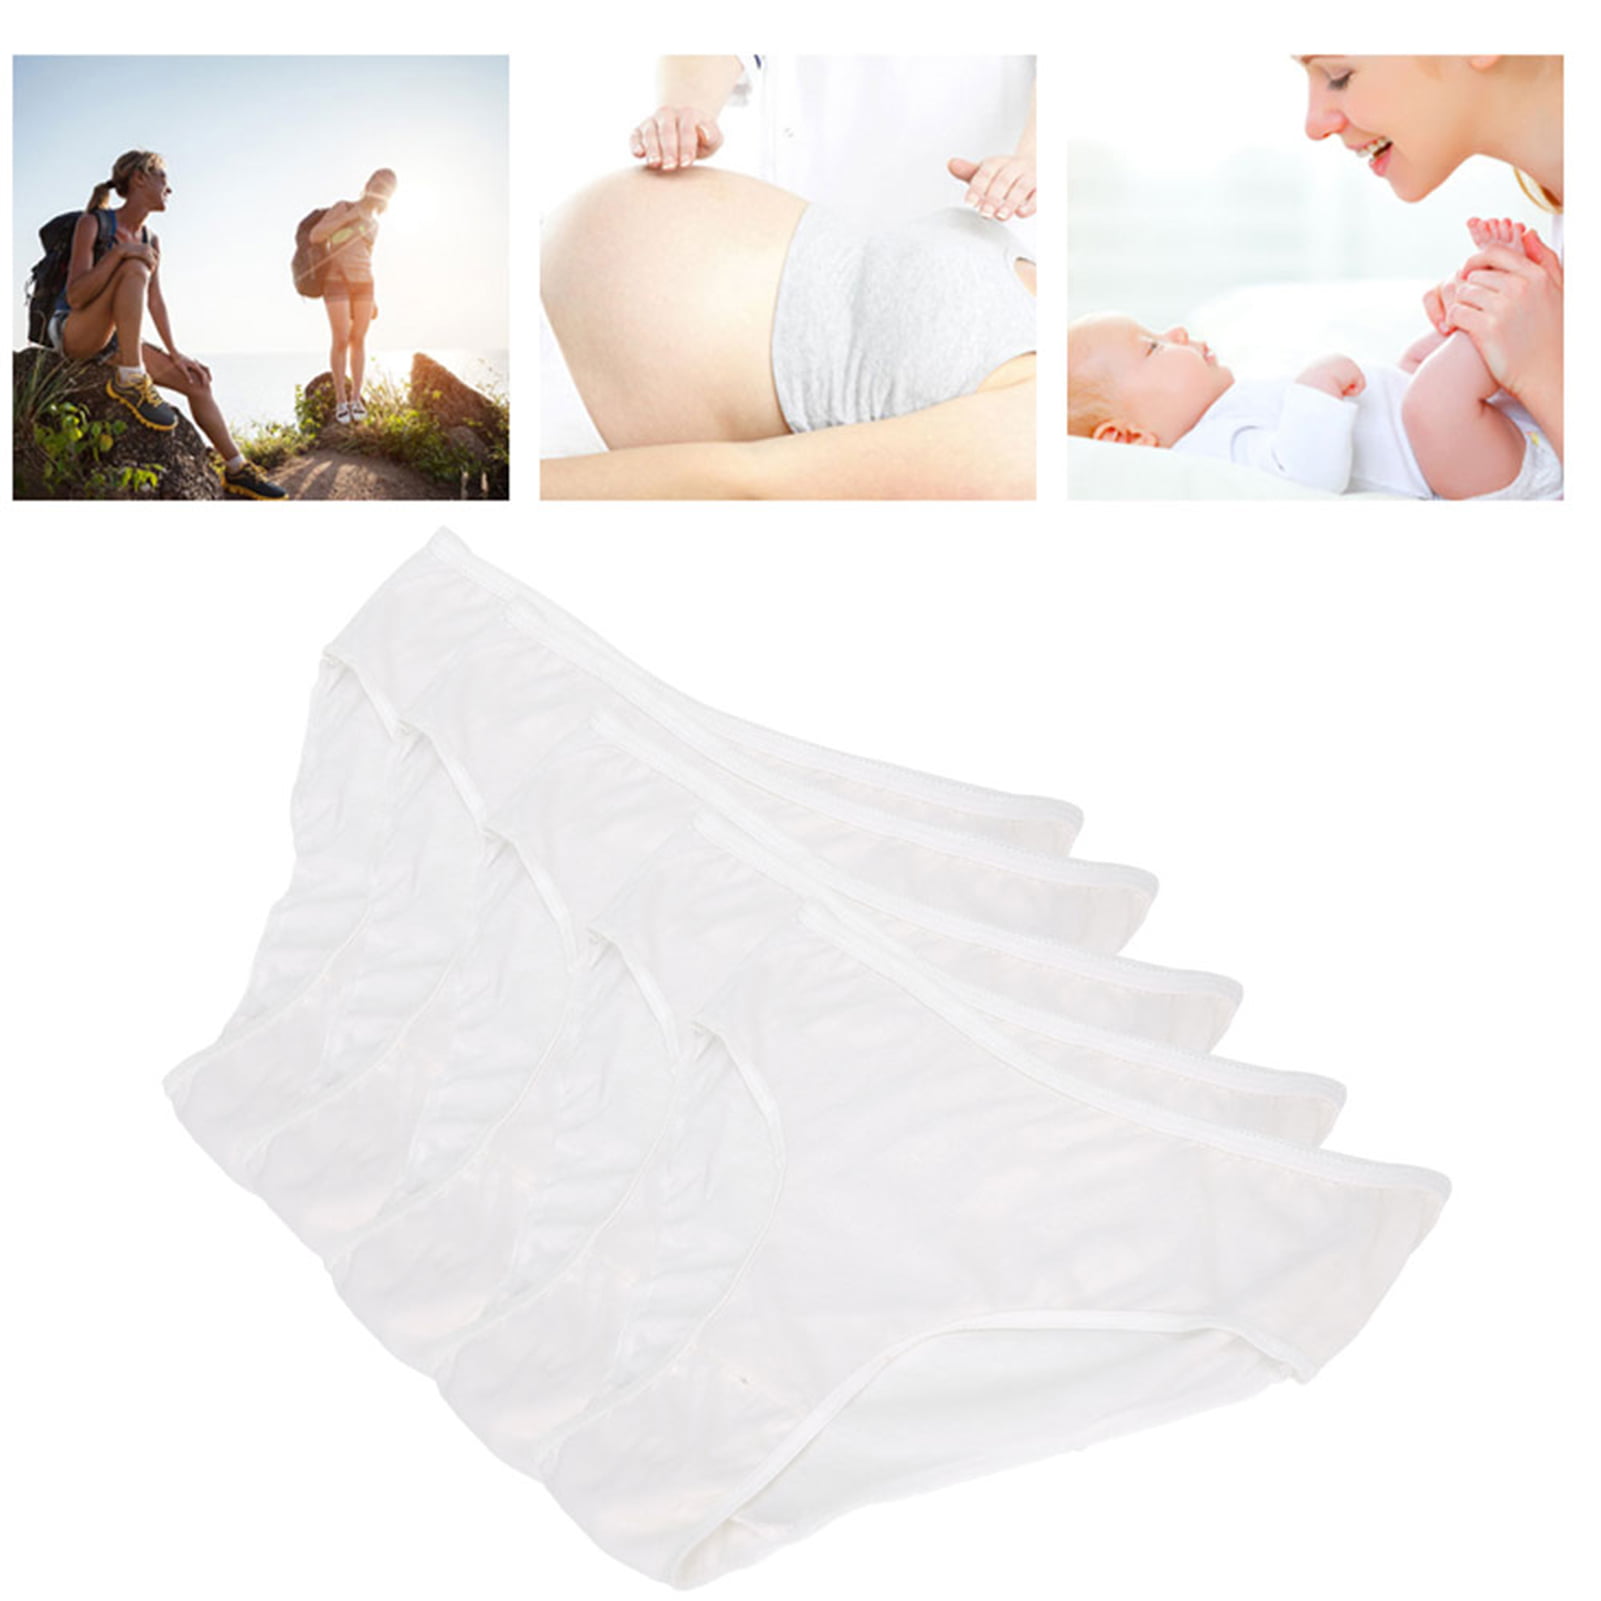 Babyono Disposable Maternity Briefs 5 pcs - 3 Sizes –